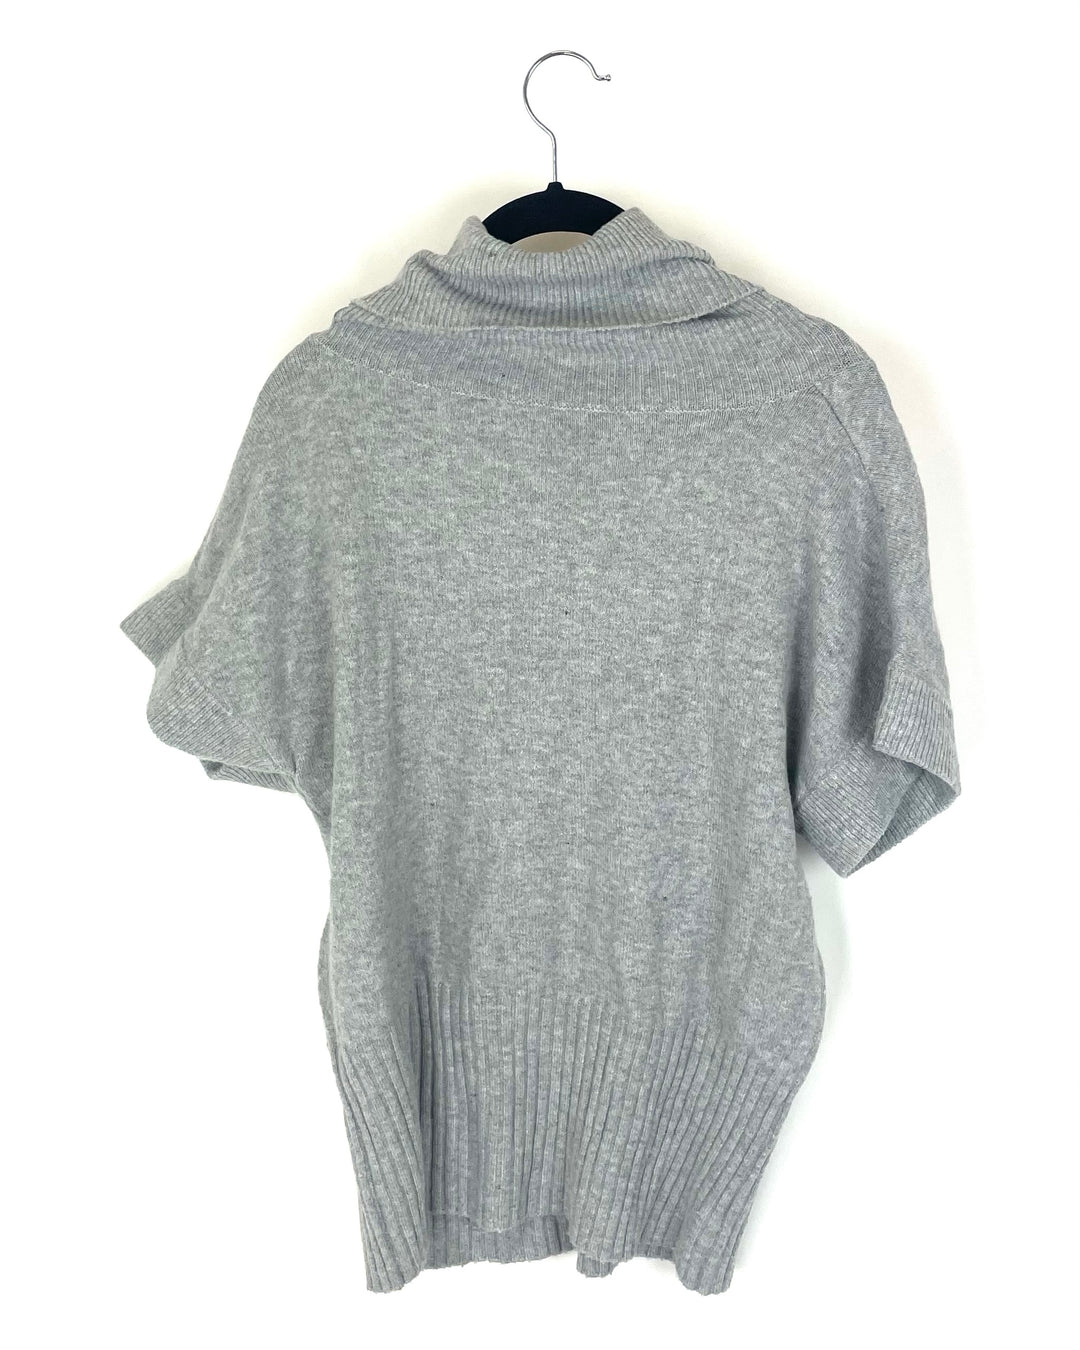 Grey Turtle Neck Sweater - Size 4-6